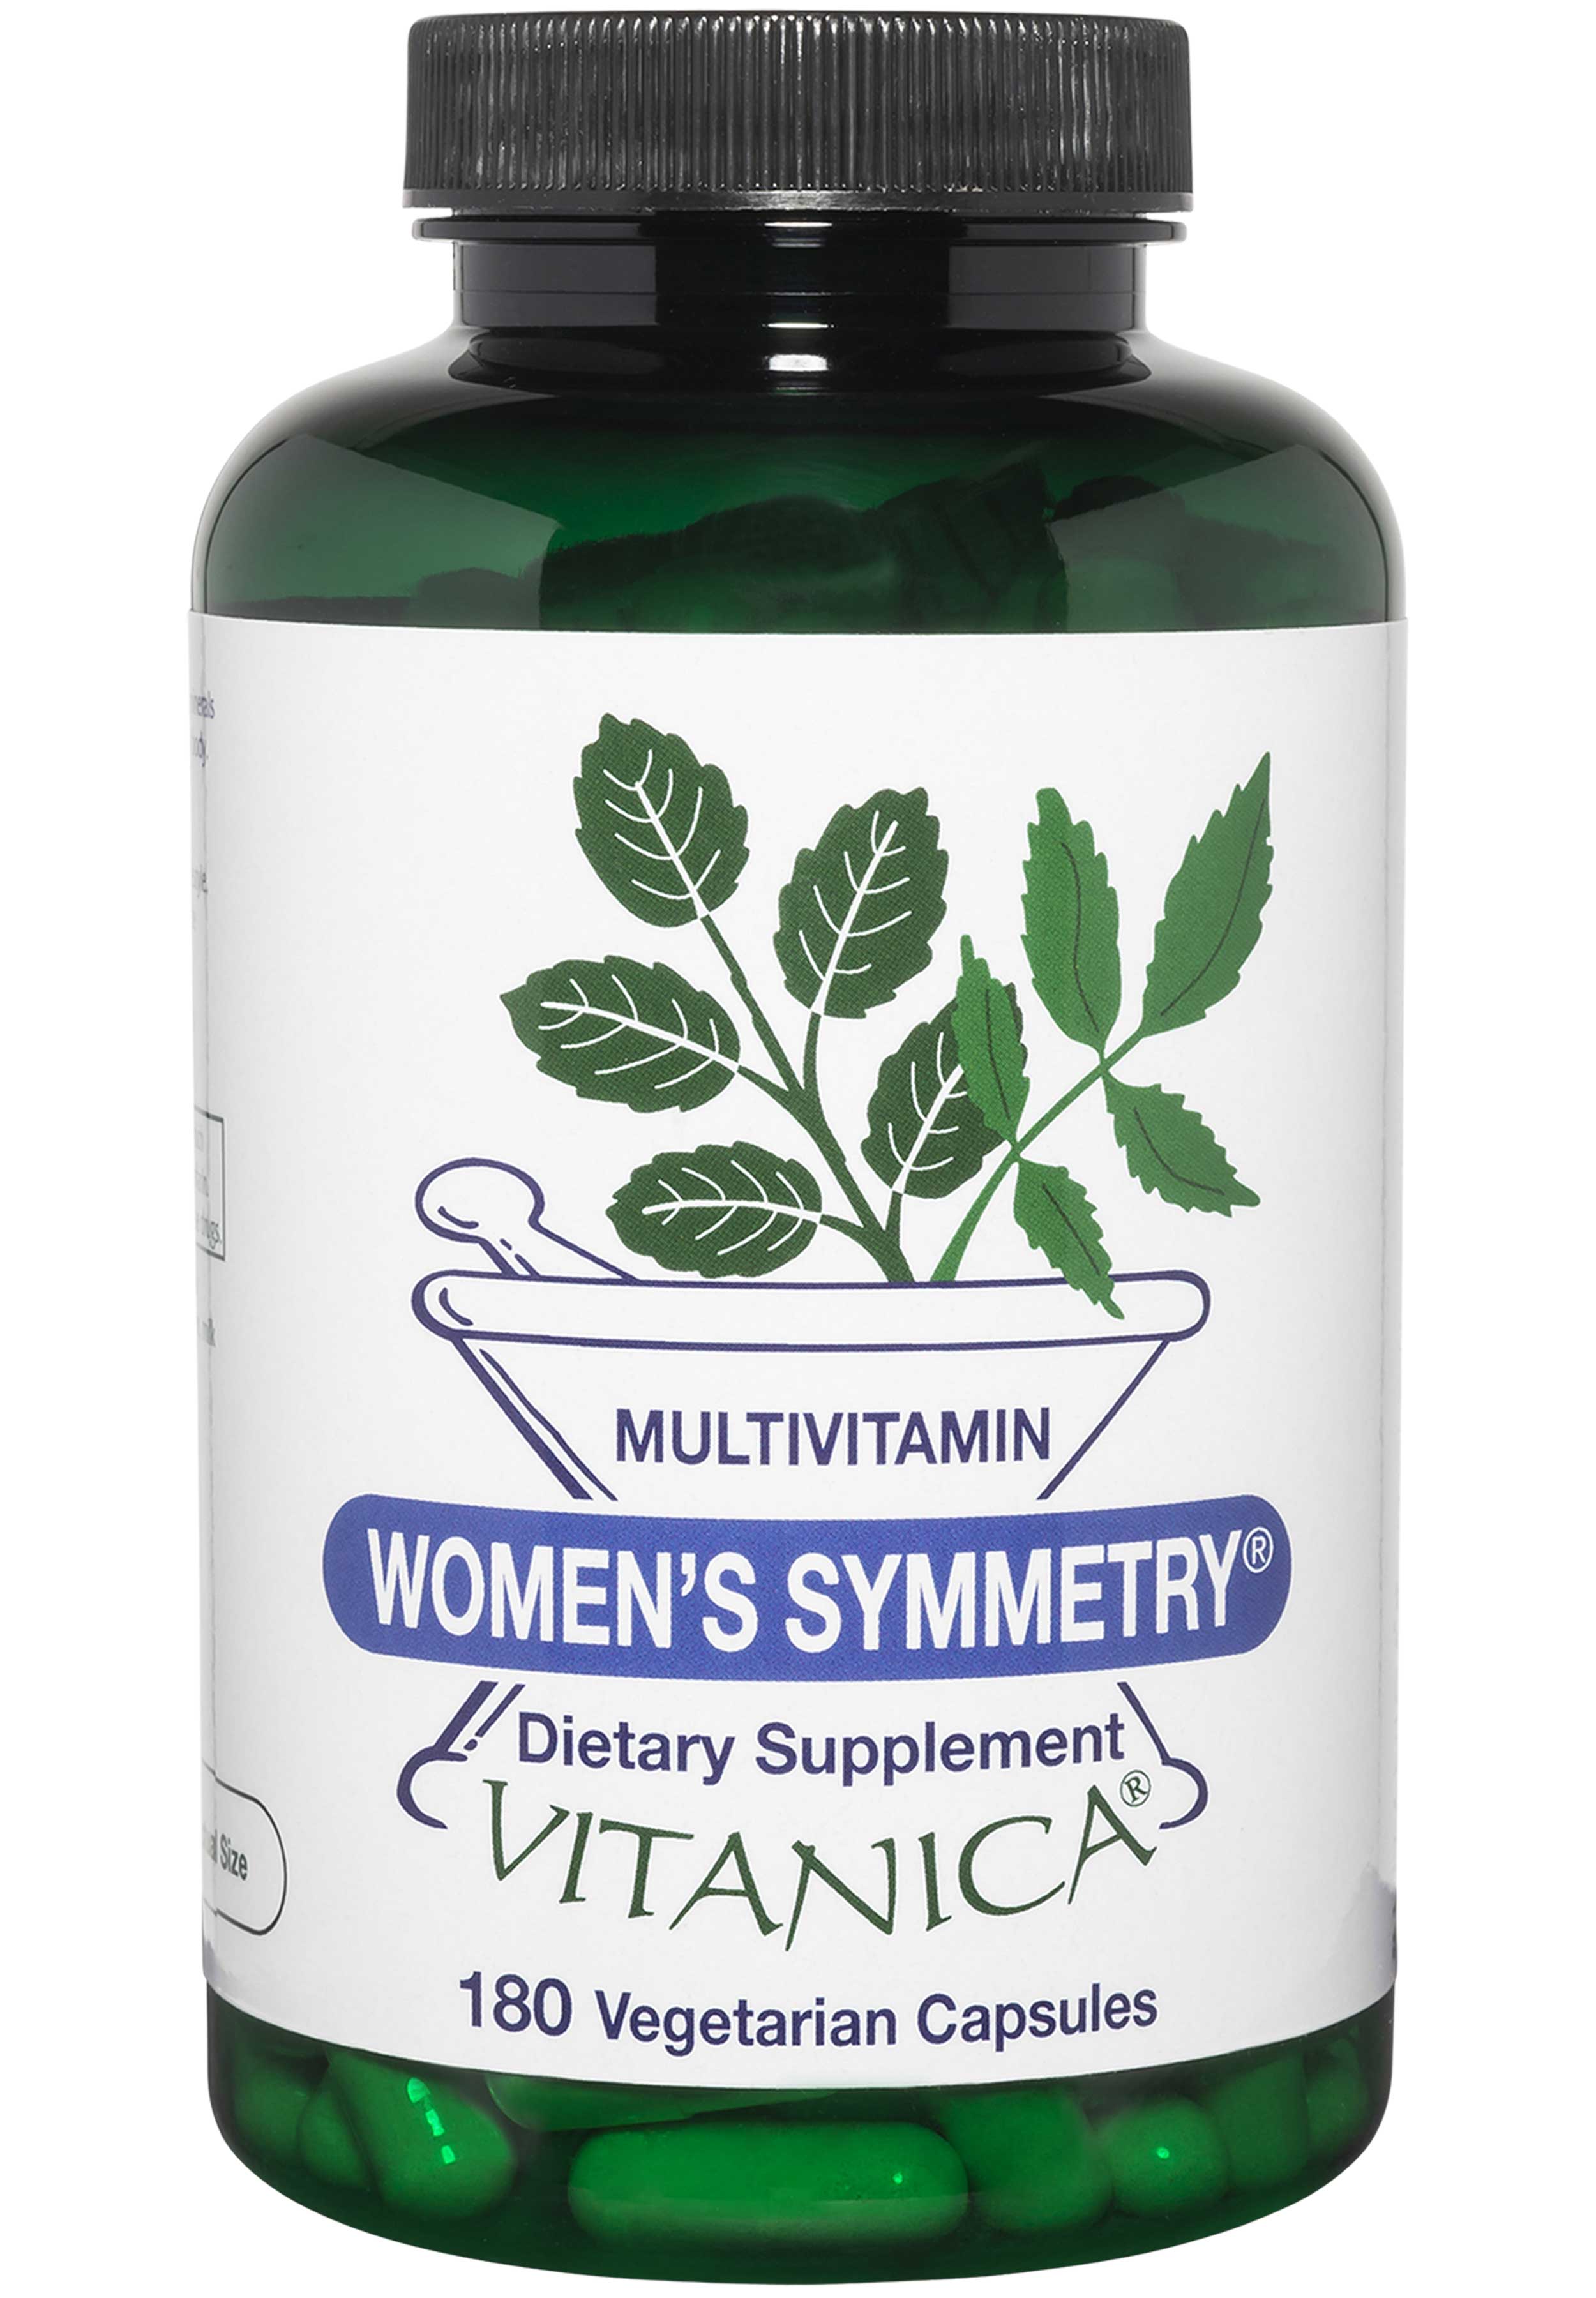 Vitanica Women’s Symmetry